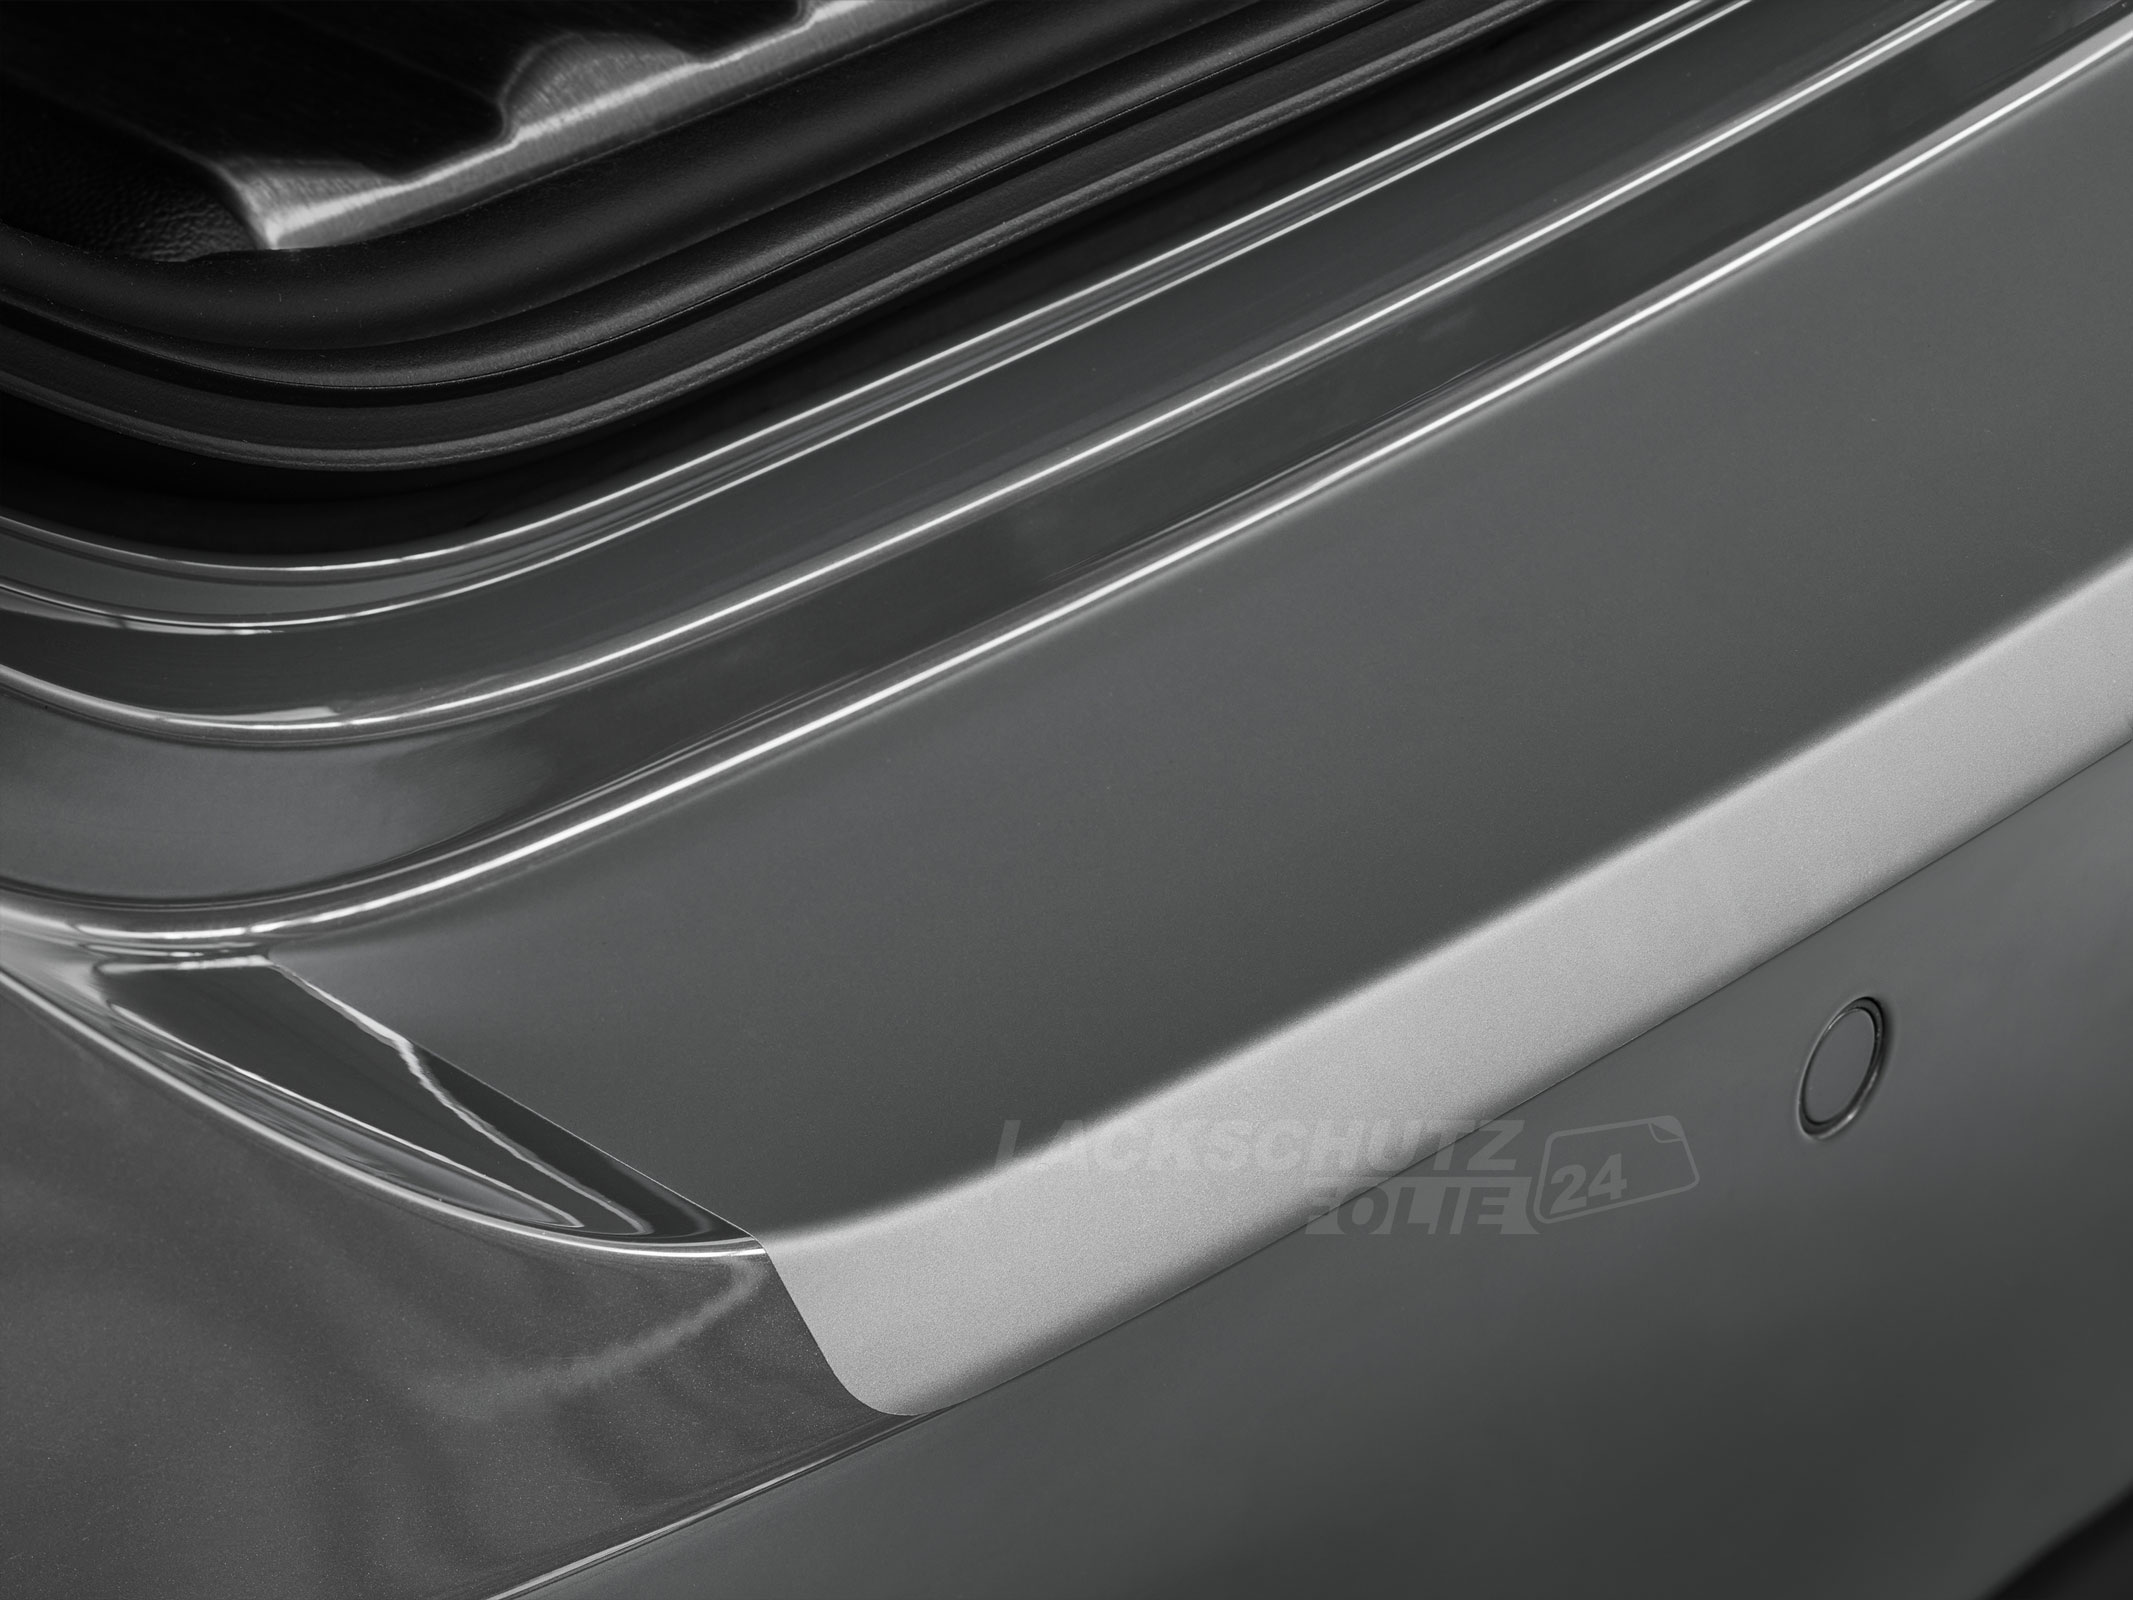 Ladekantenschutzfolie - Transparent Glatt MATT 110 µm stark  für Renault Talisman Limousine ab BJ 01/2016